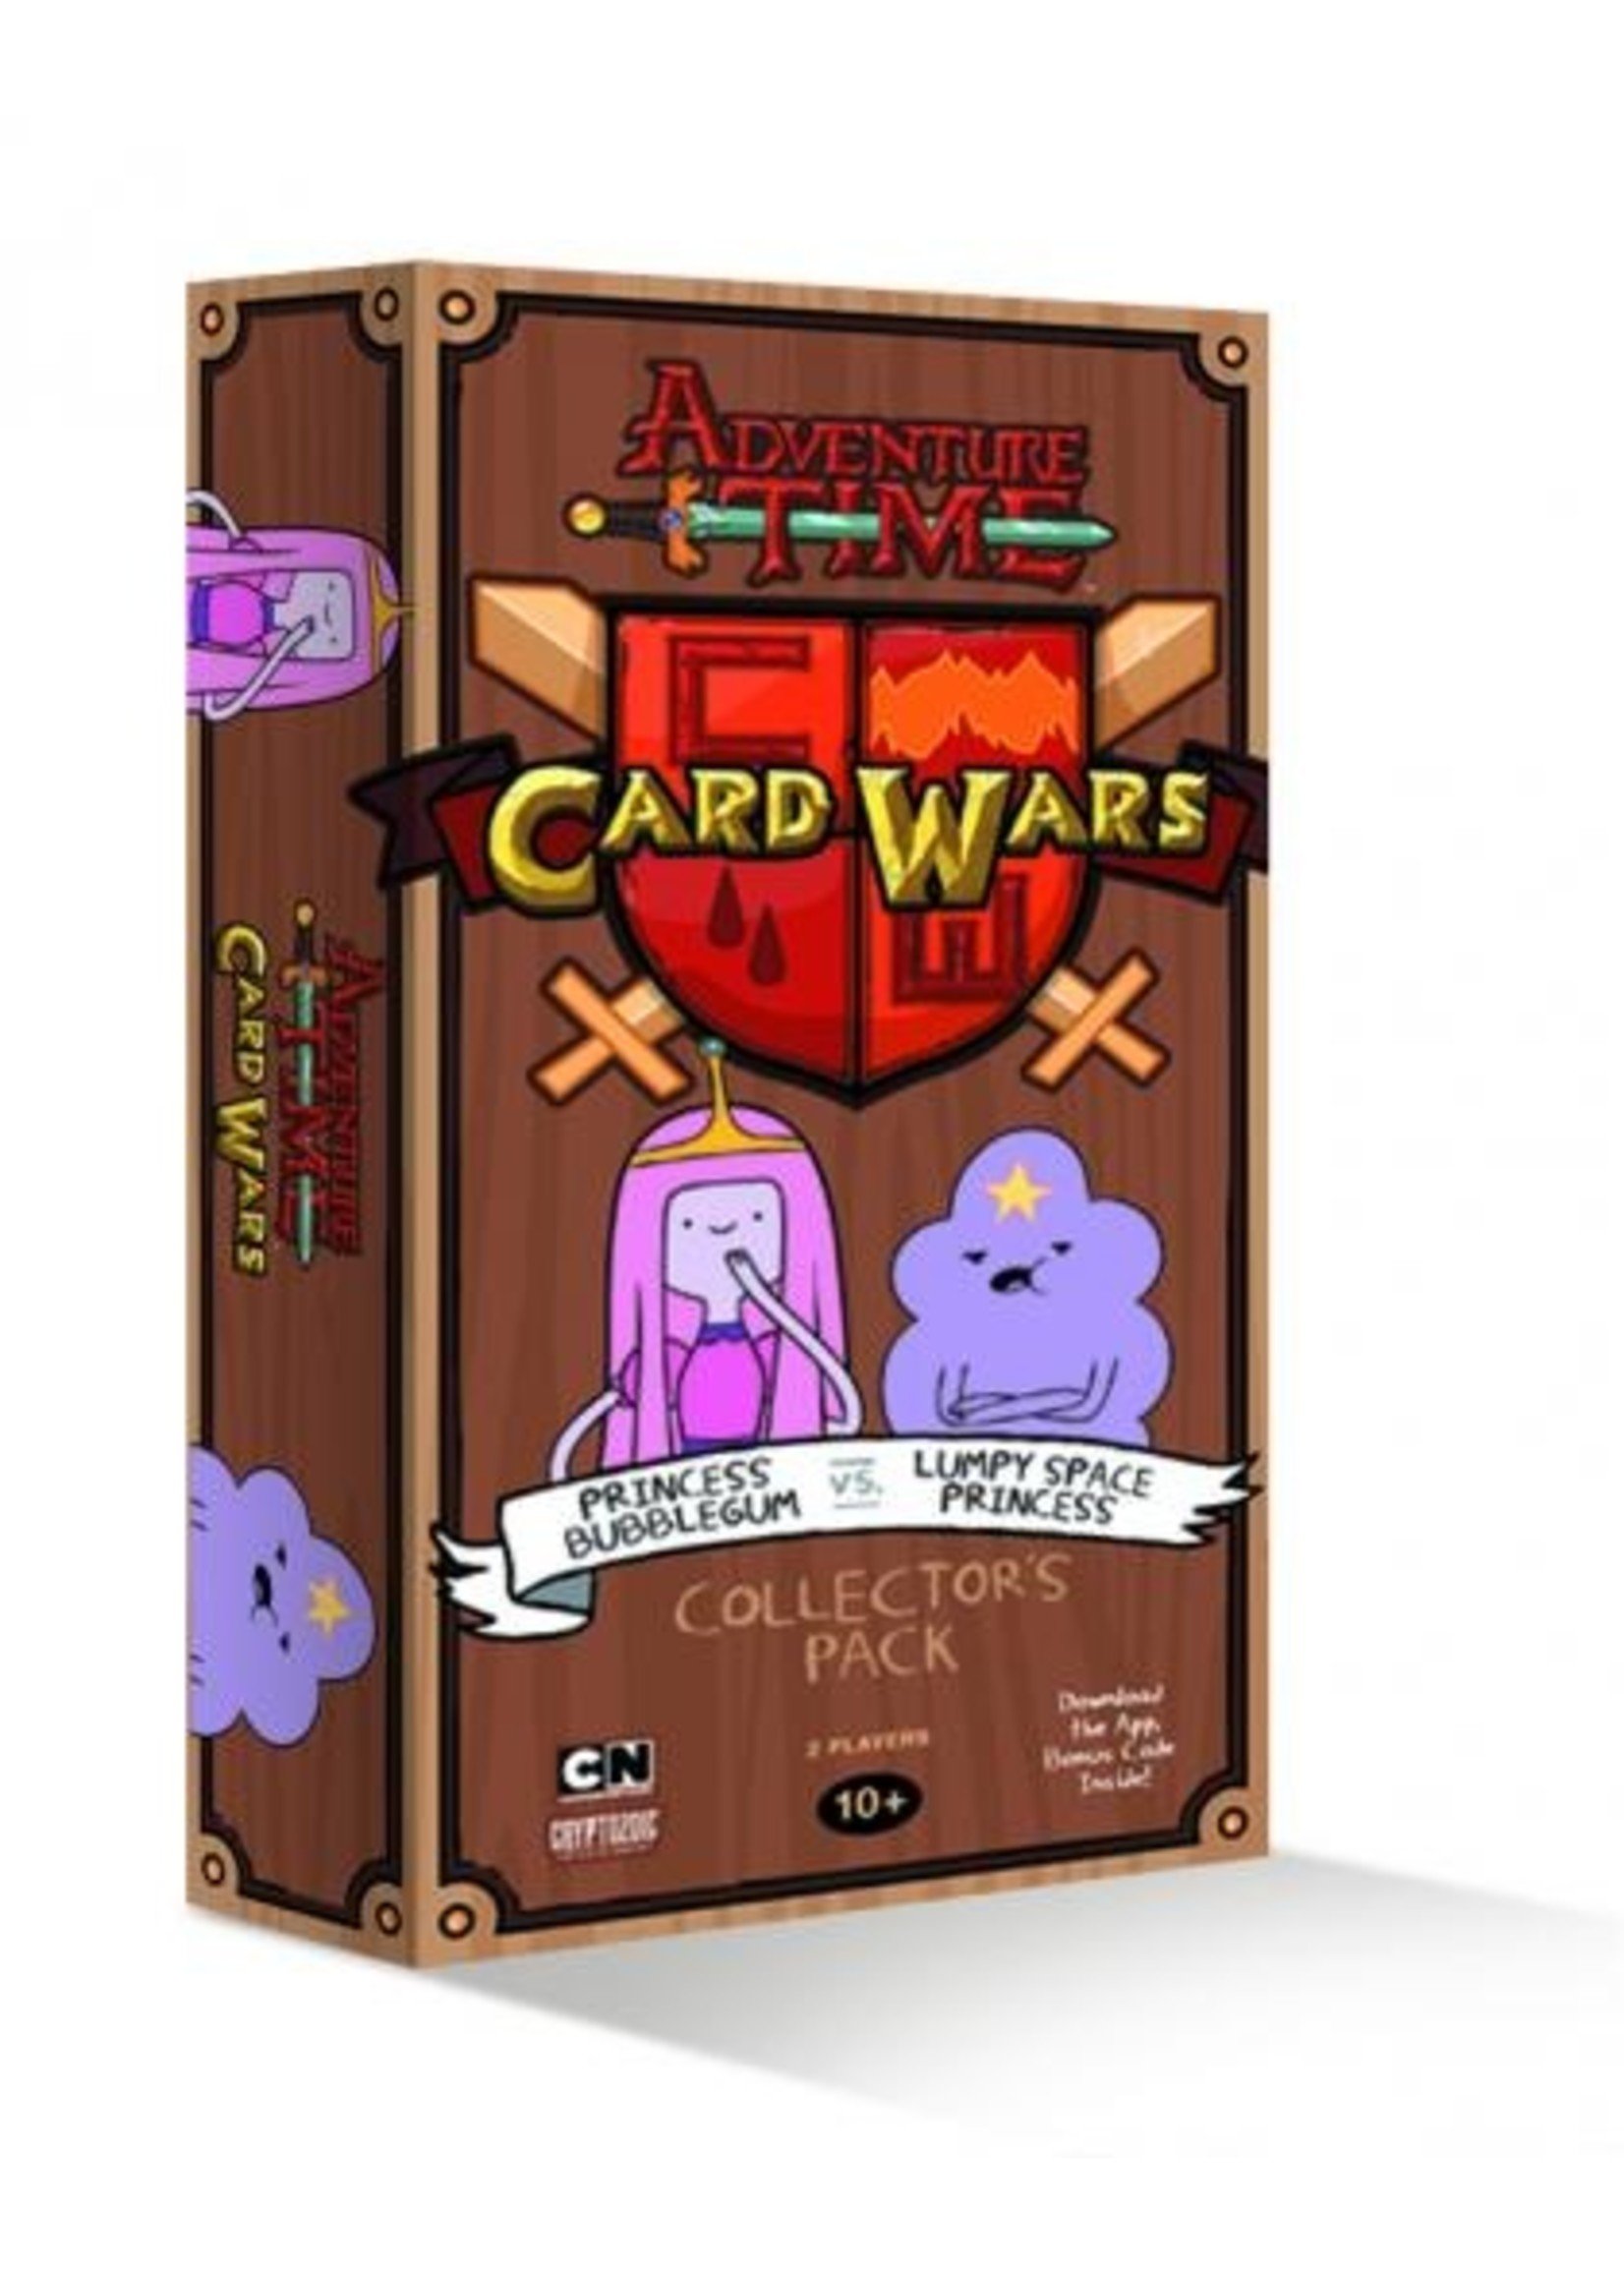 Adventure Time Card Wars: Princess Bubblegum VS Lumpy Space Princess Collector's Pack #3